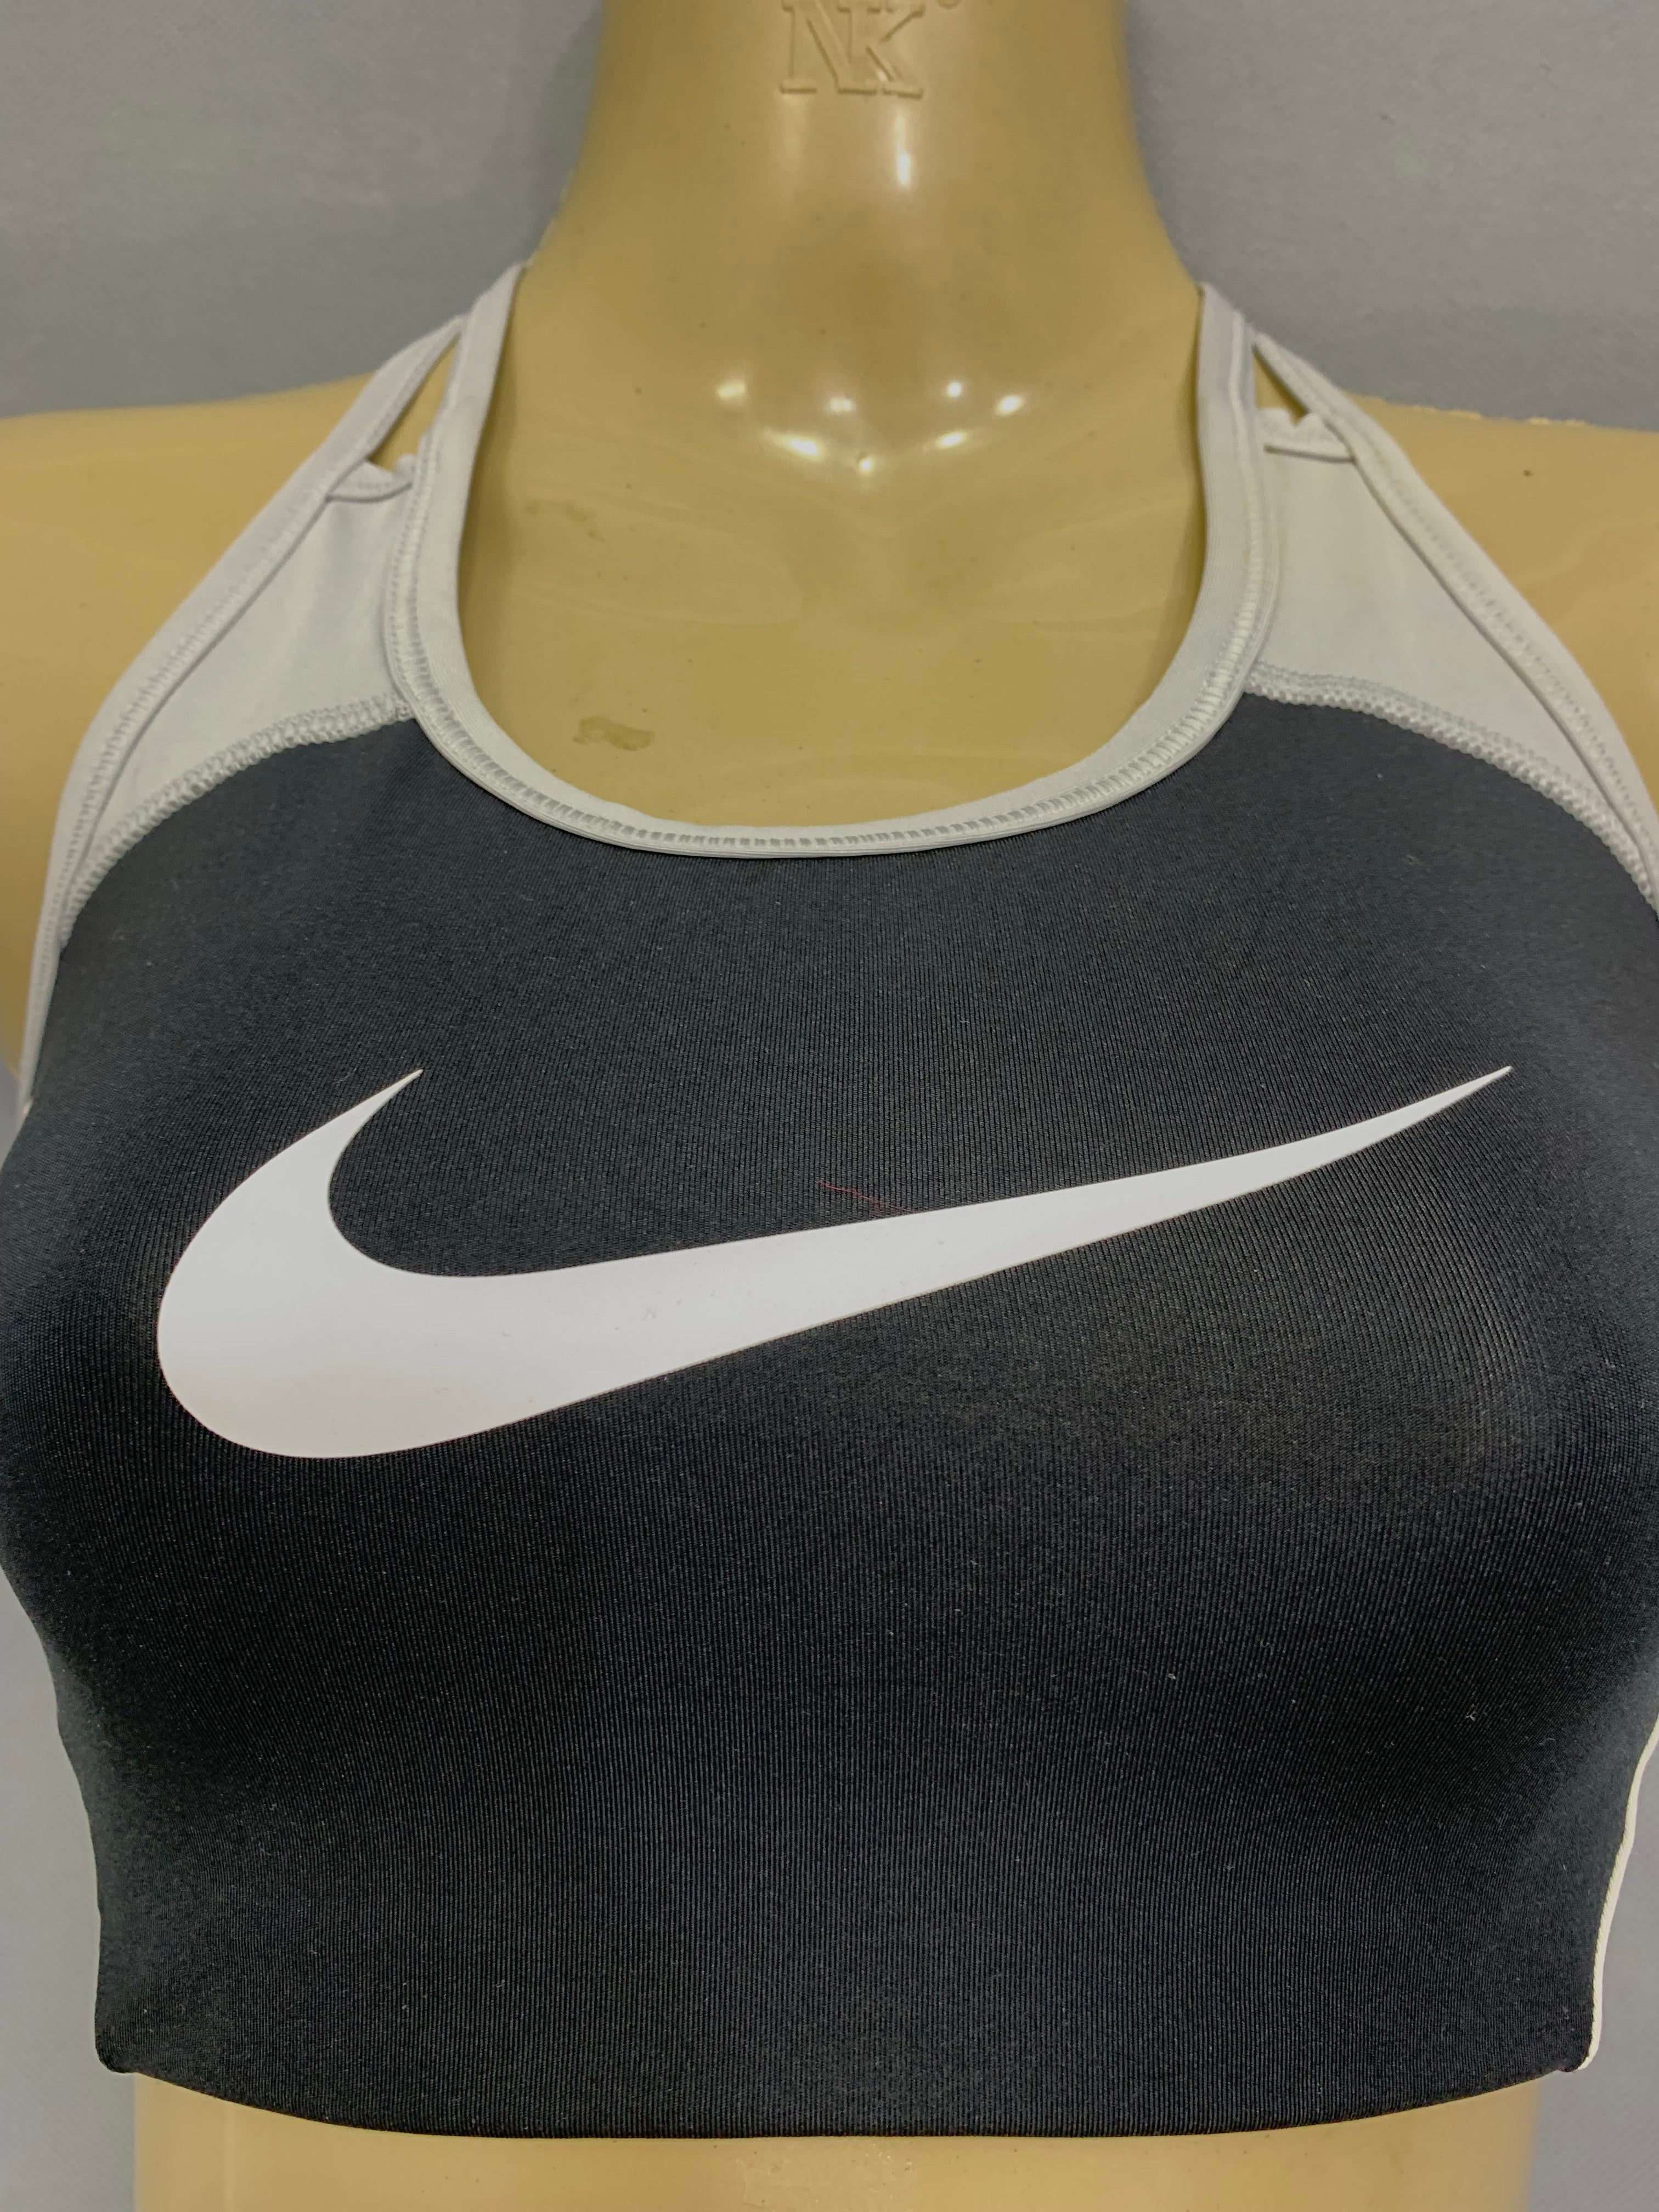 Nike Dir Fit Branded Original Sports Gym Bra For Women